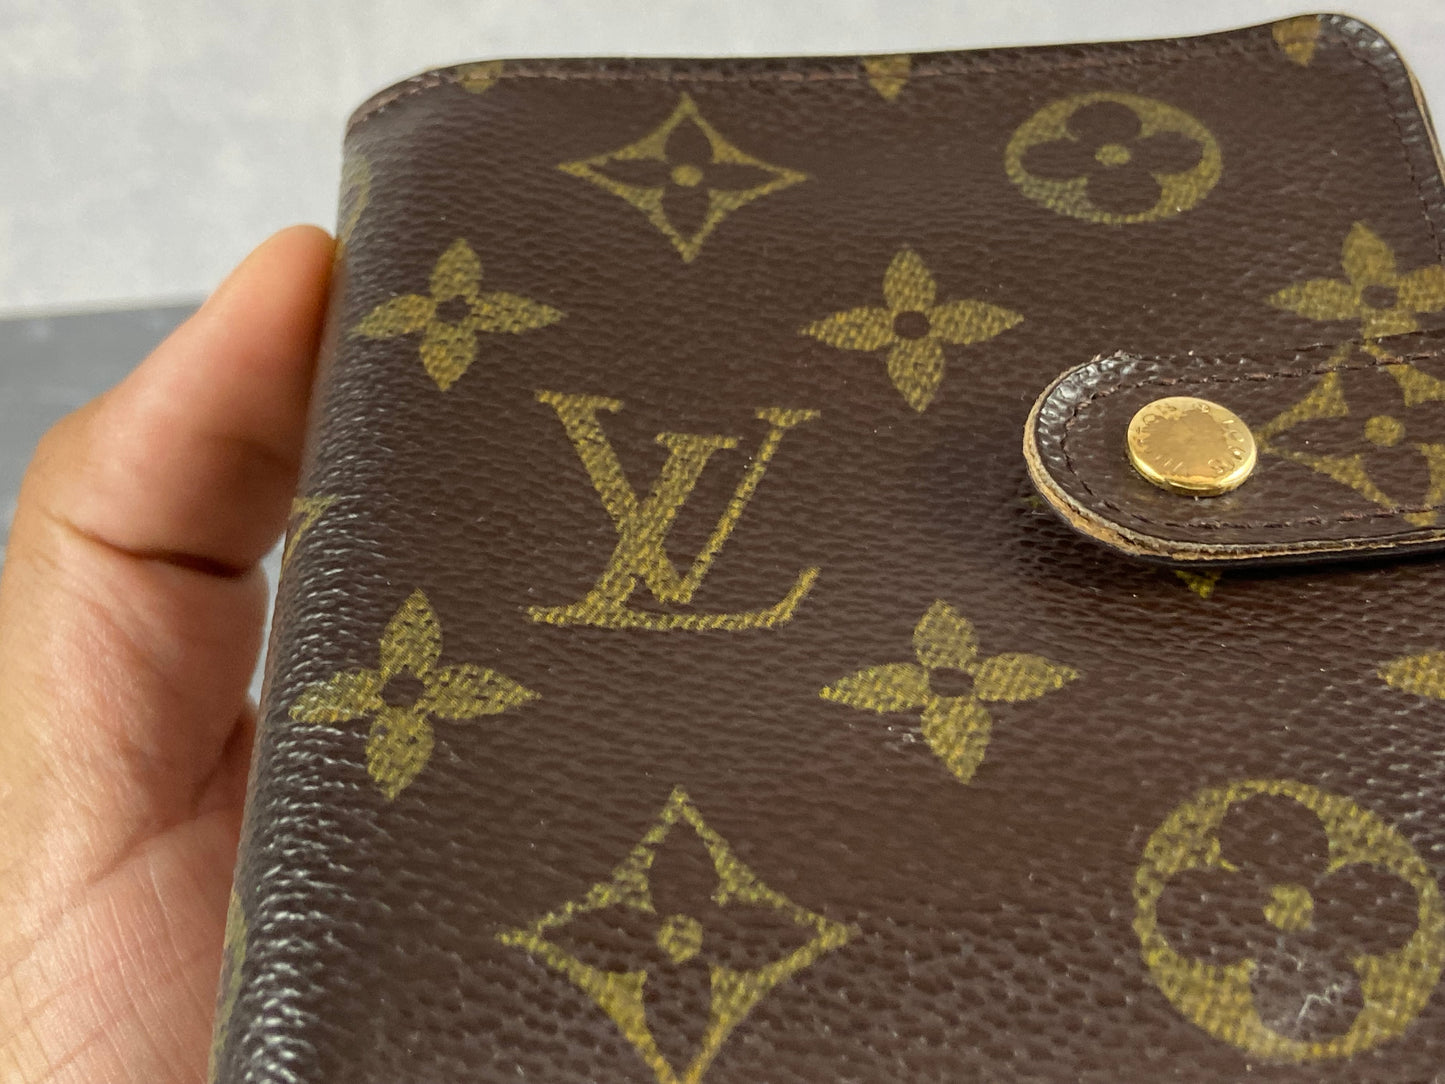 Louis Vuitton Compact Zip Wallet Monogram Canvas